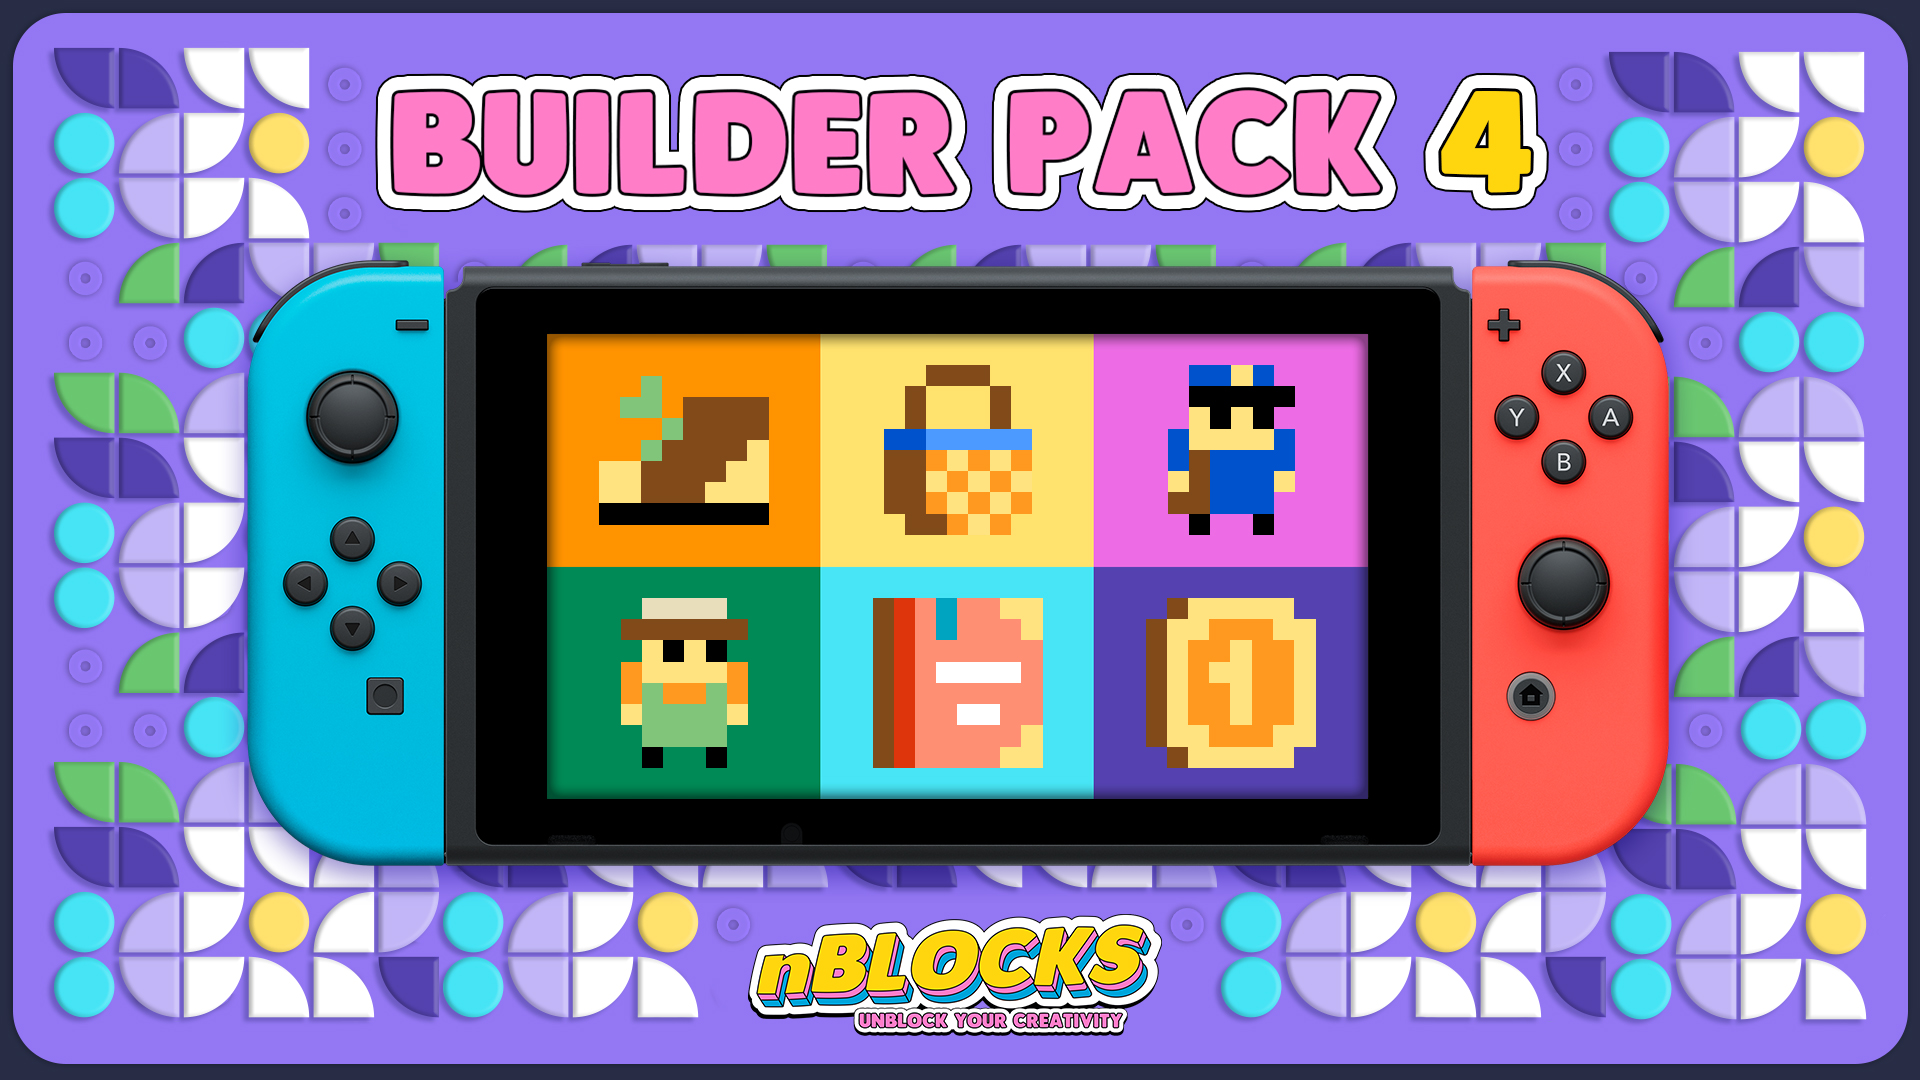 Builder Pack 4